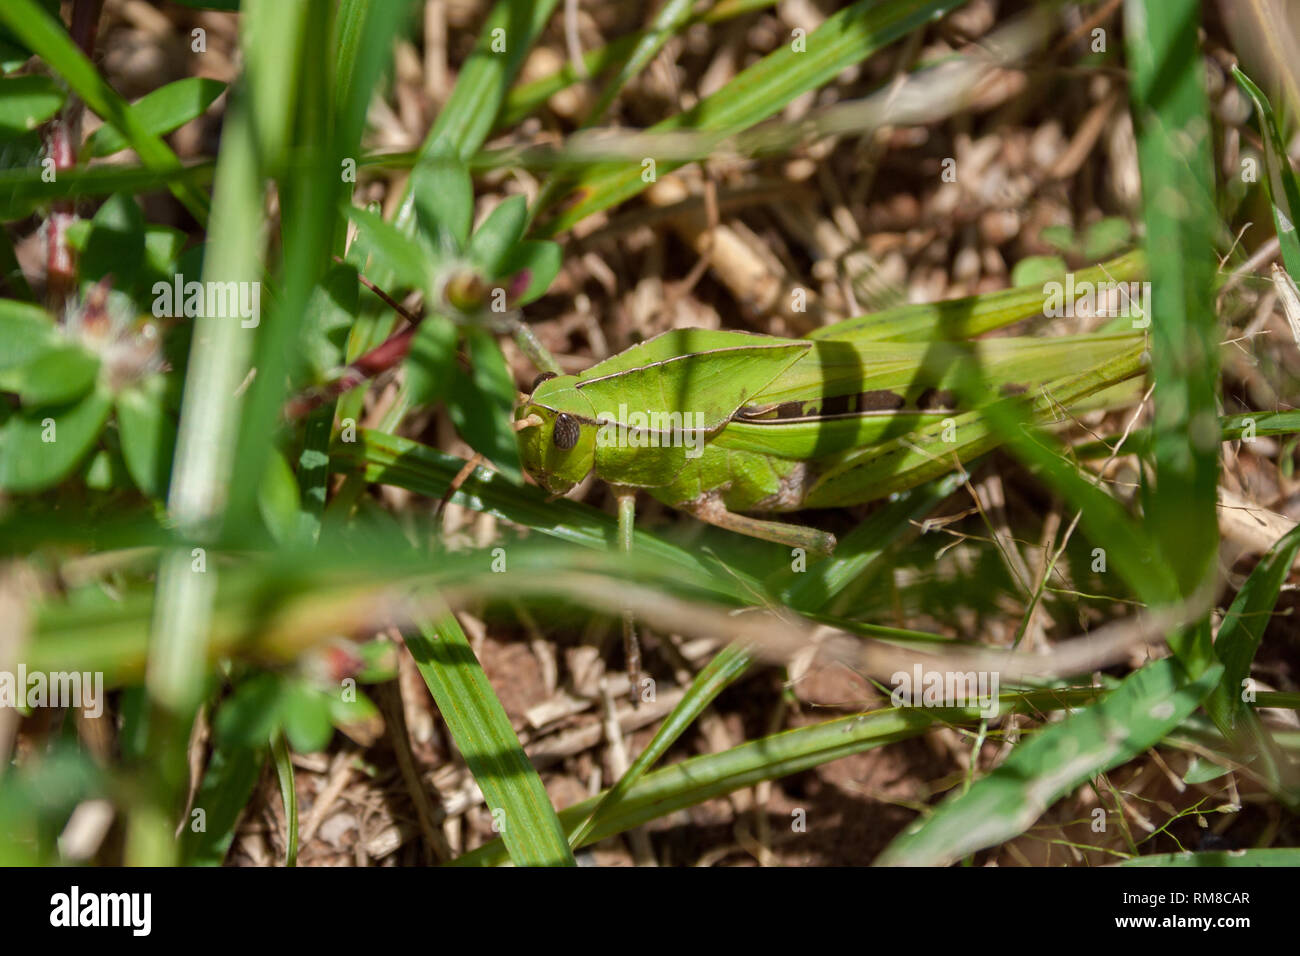 Green grasshopper (Xyleus sp.) (possibly Xyleus insignis) in grass, Asuncion, Paraguay Stock Photo